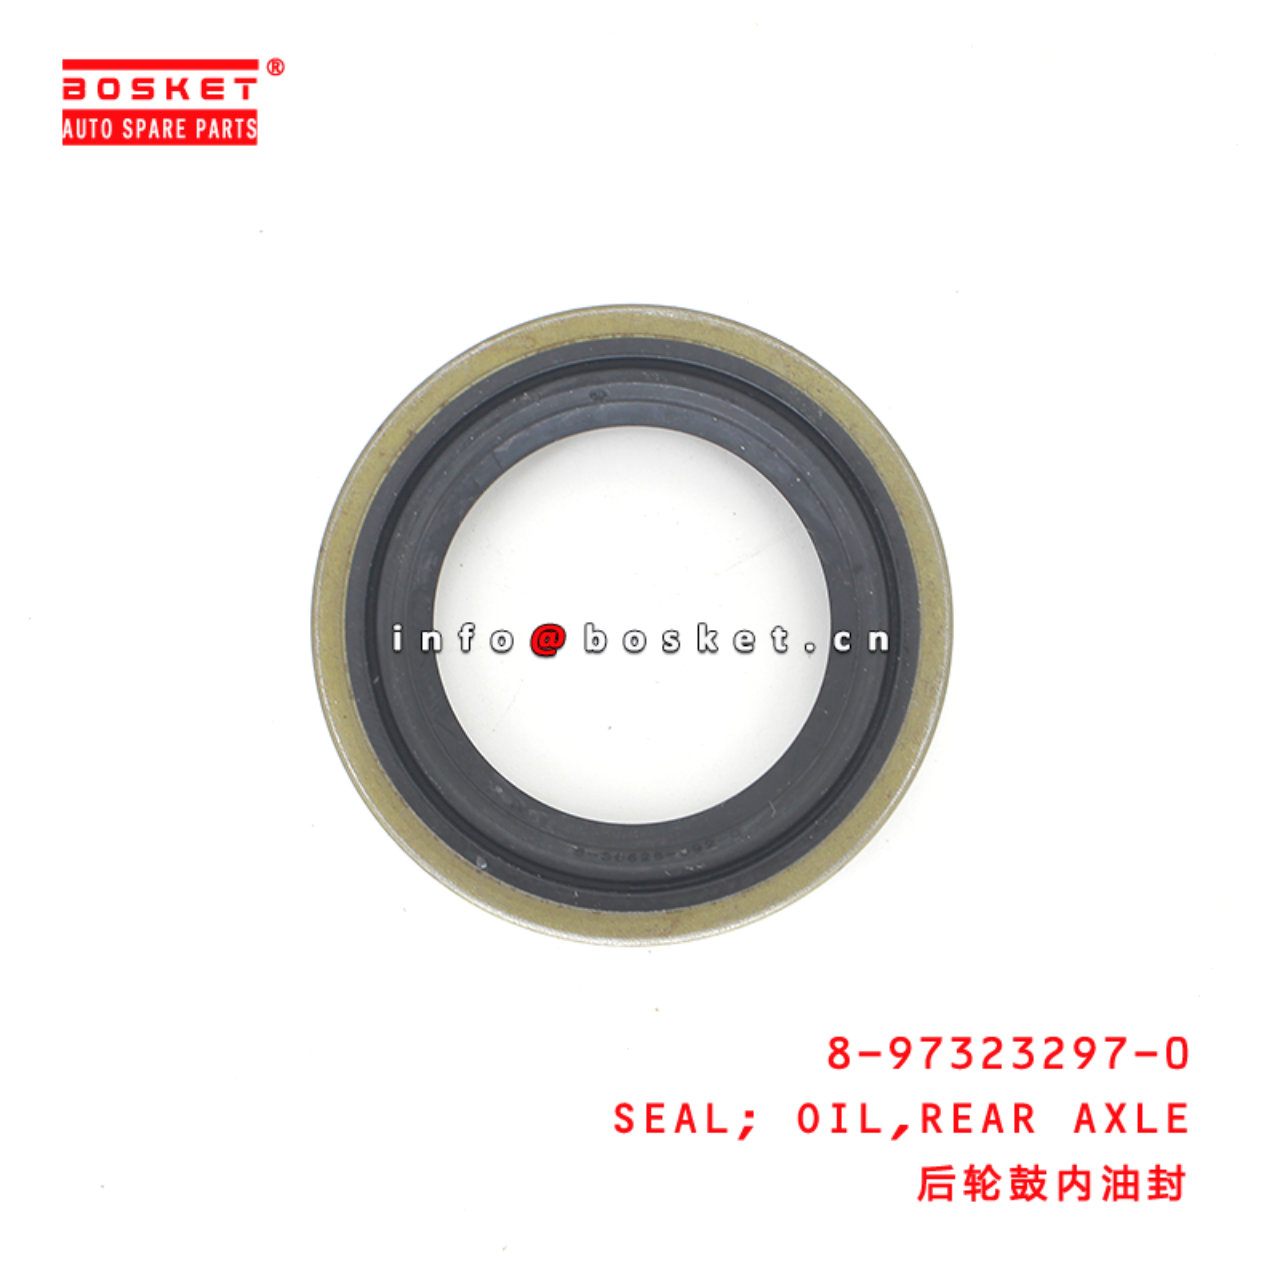 8-97323297-0 Rear Axle Oil Seal suitable for ISUZU 8973232970